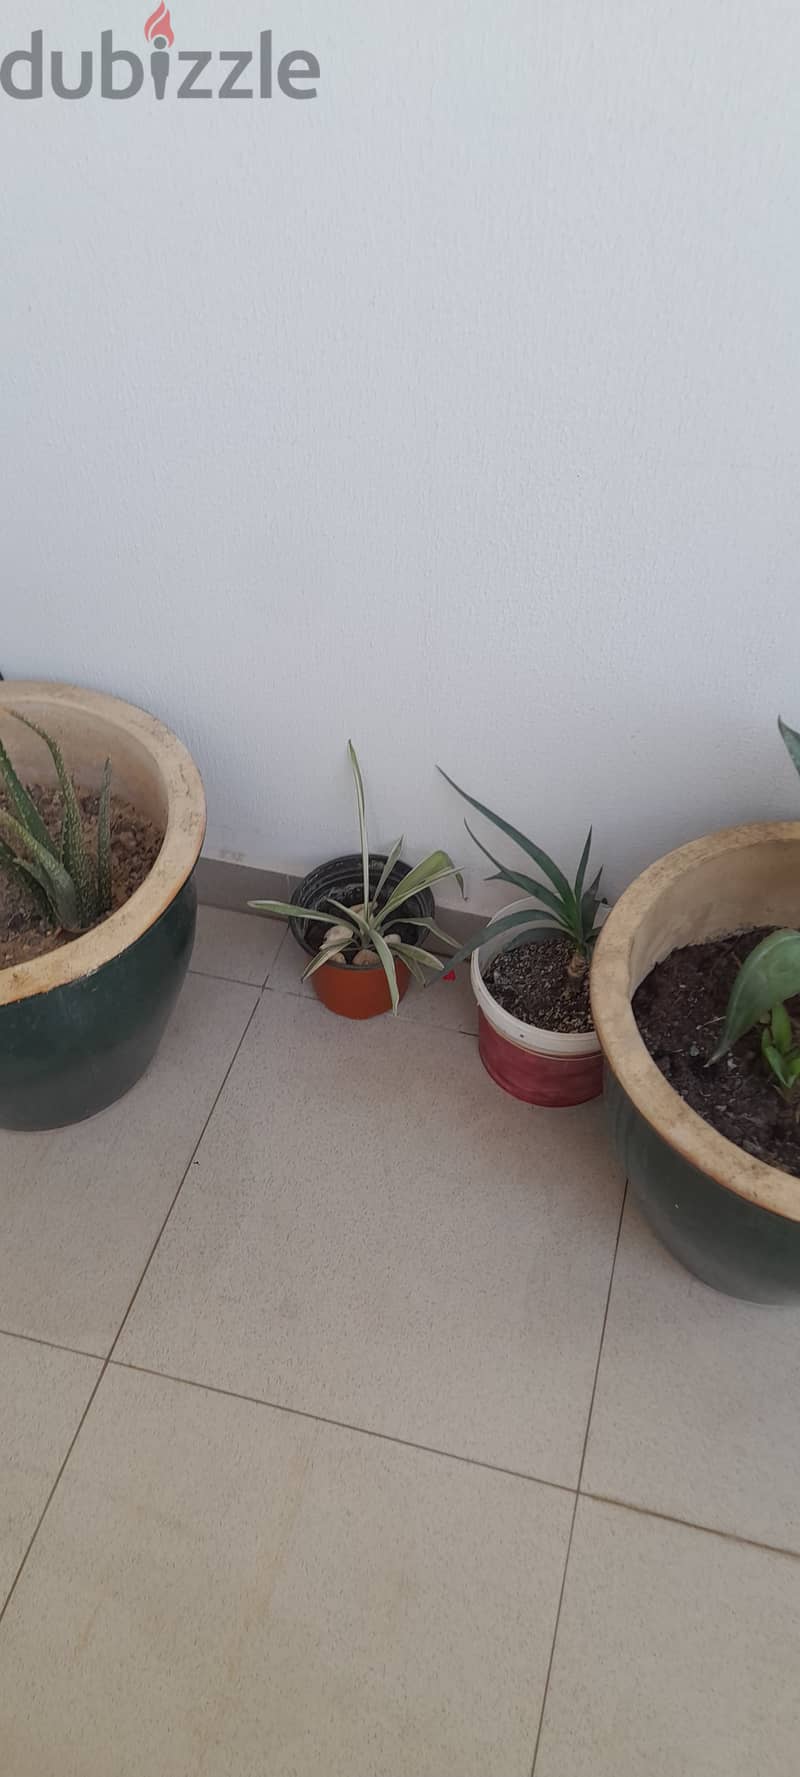 Plants for sale 2